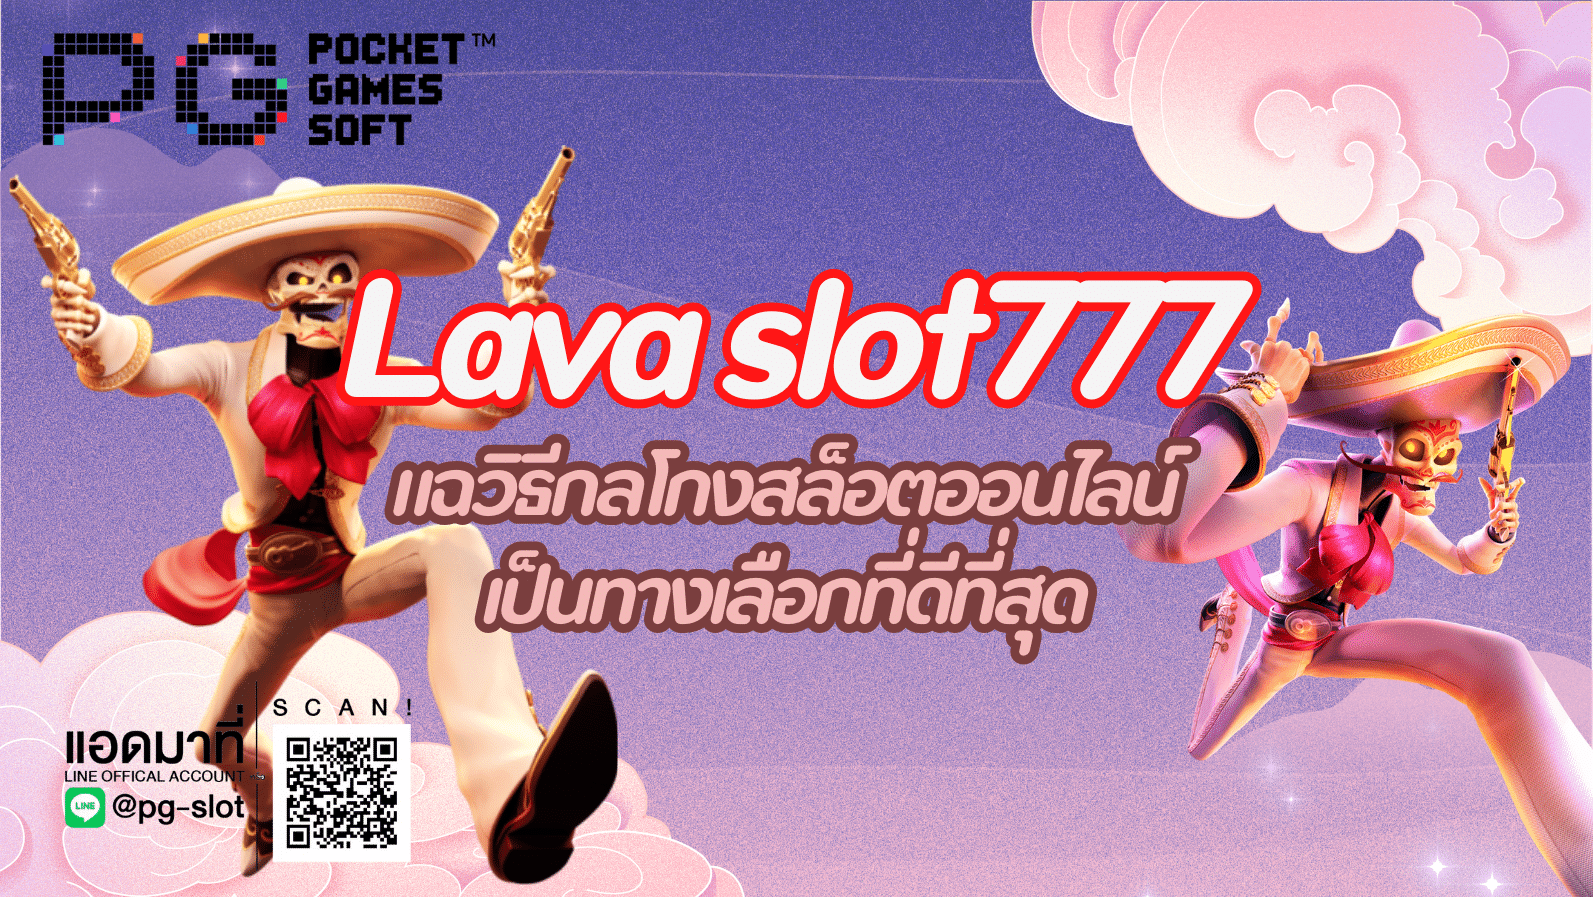 Lava slot777